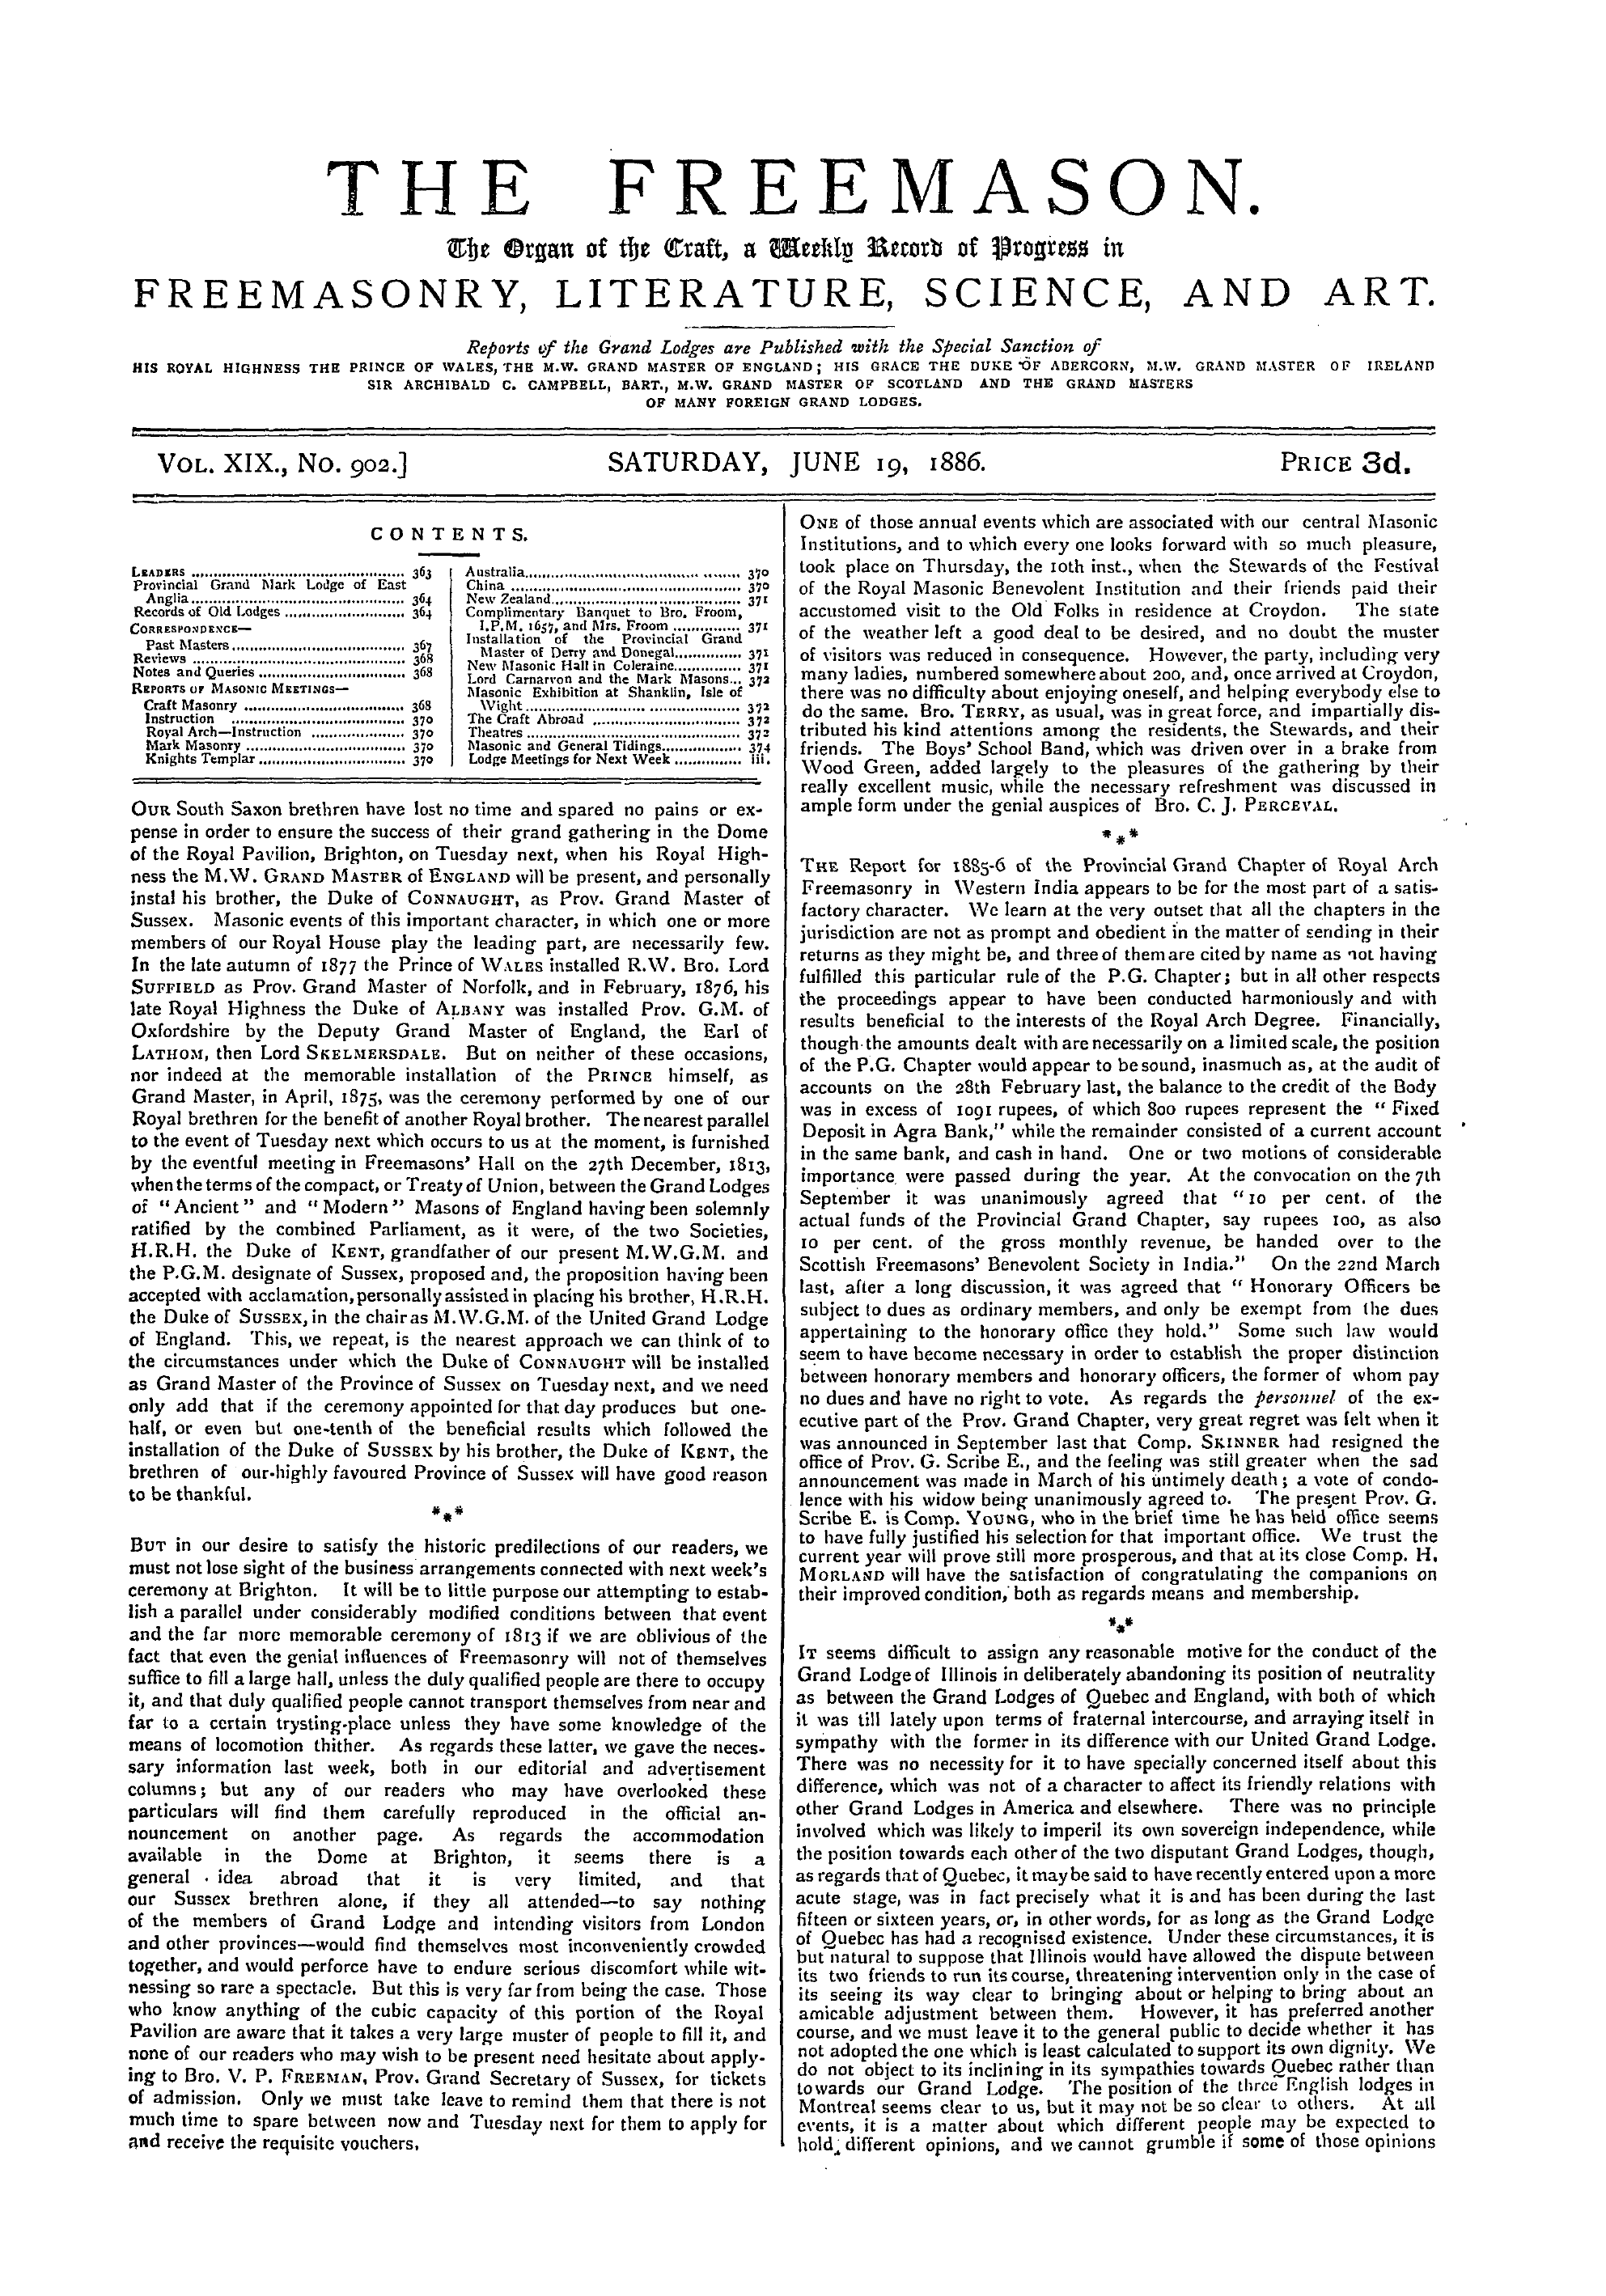 The Freemason: 1886-06-19: 1